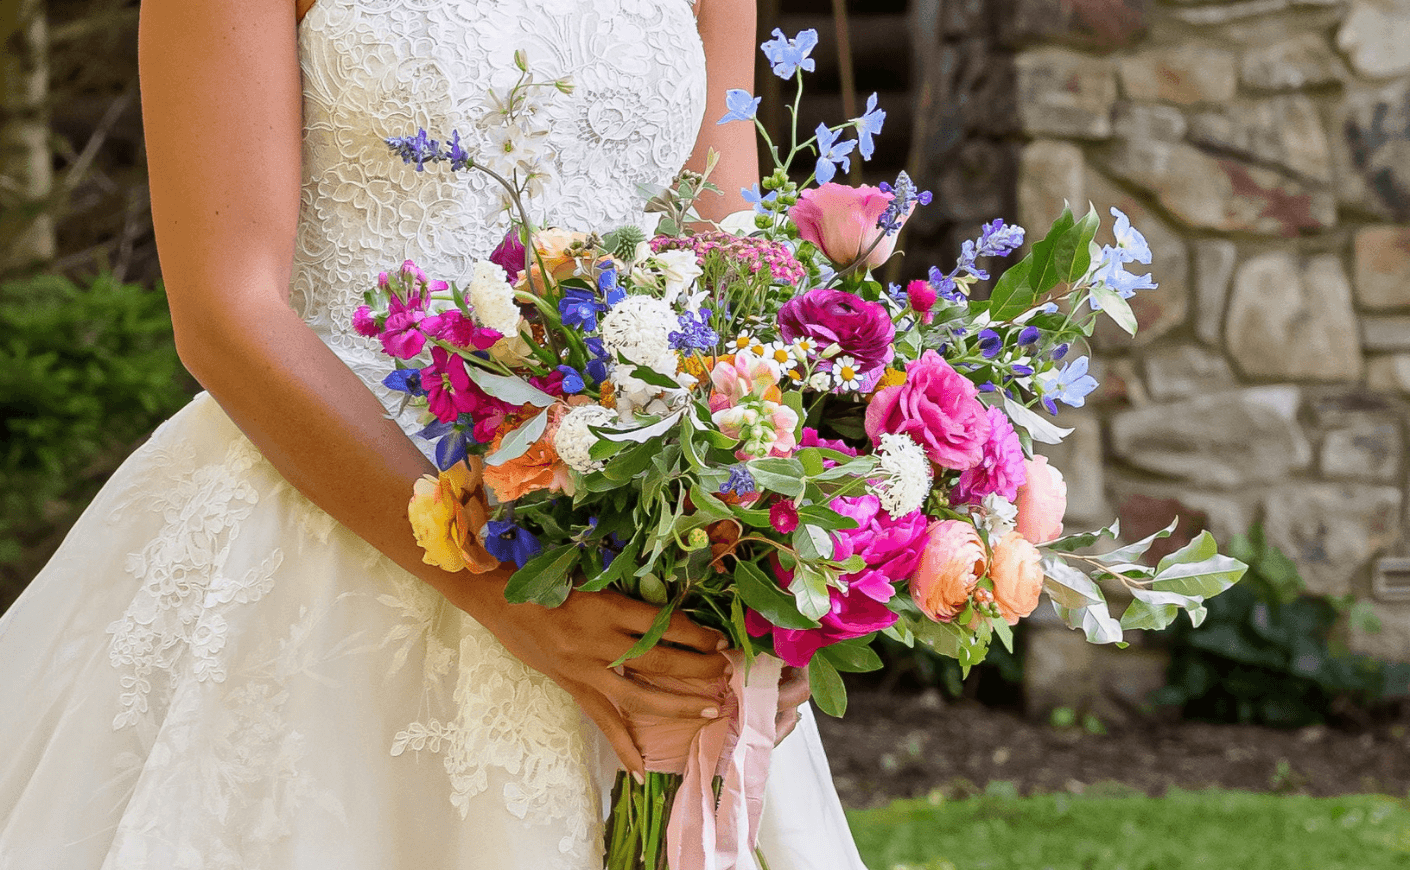 Ellie Monahan holding her bridal bouquet